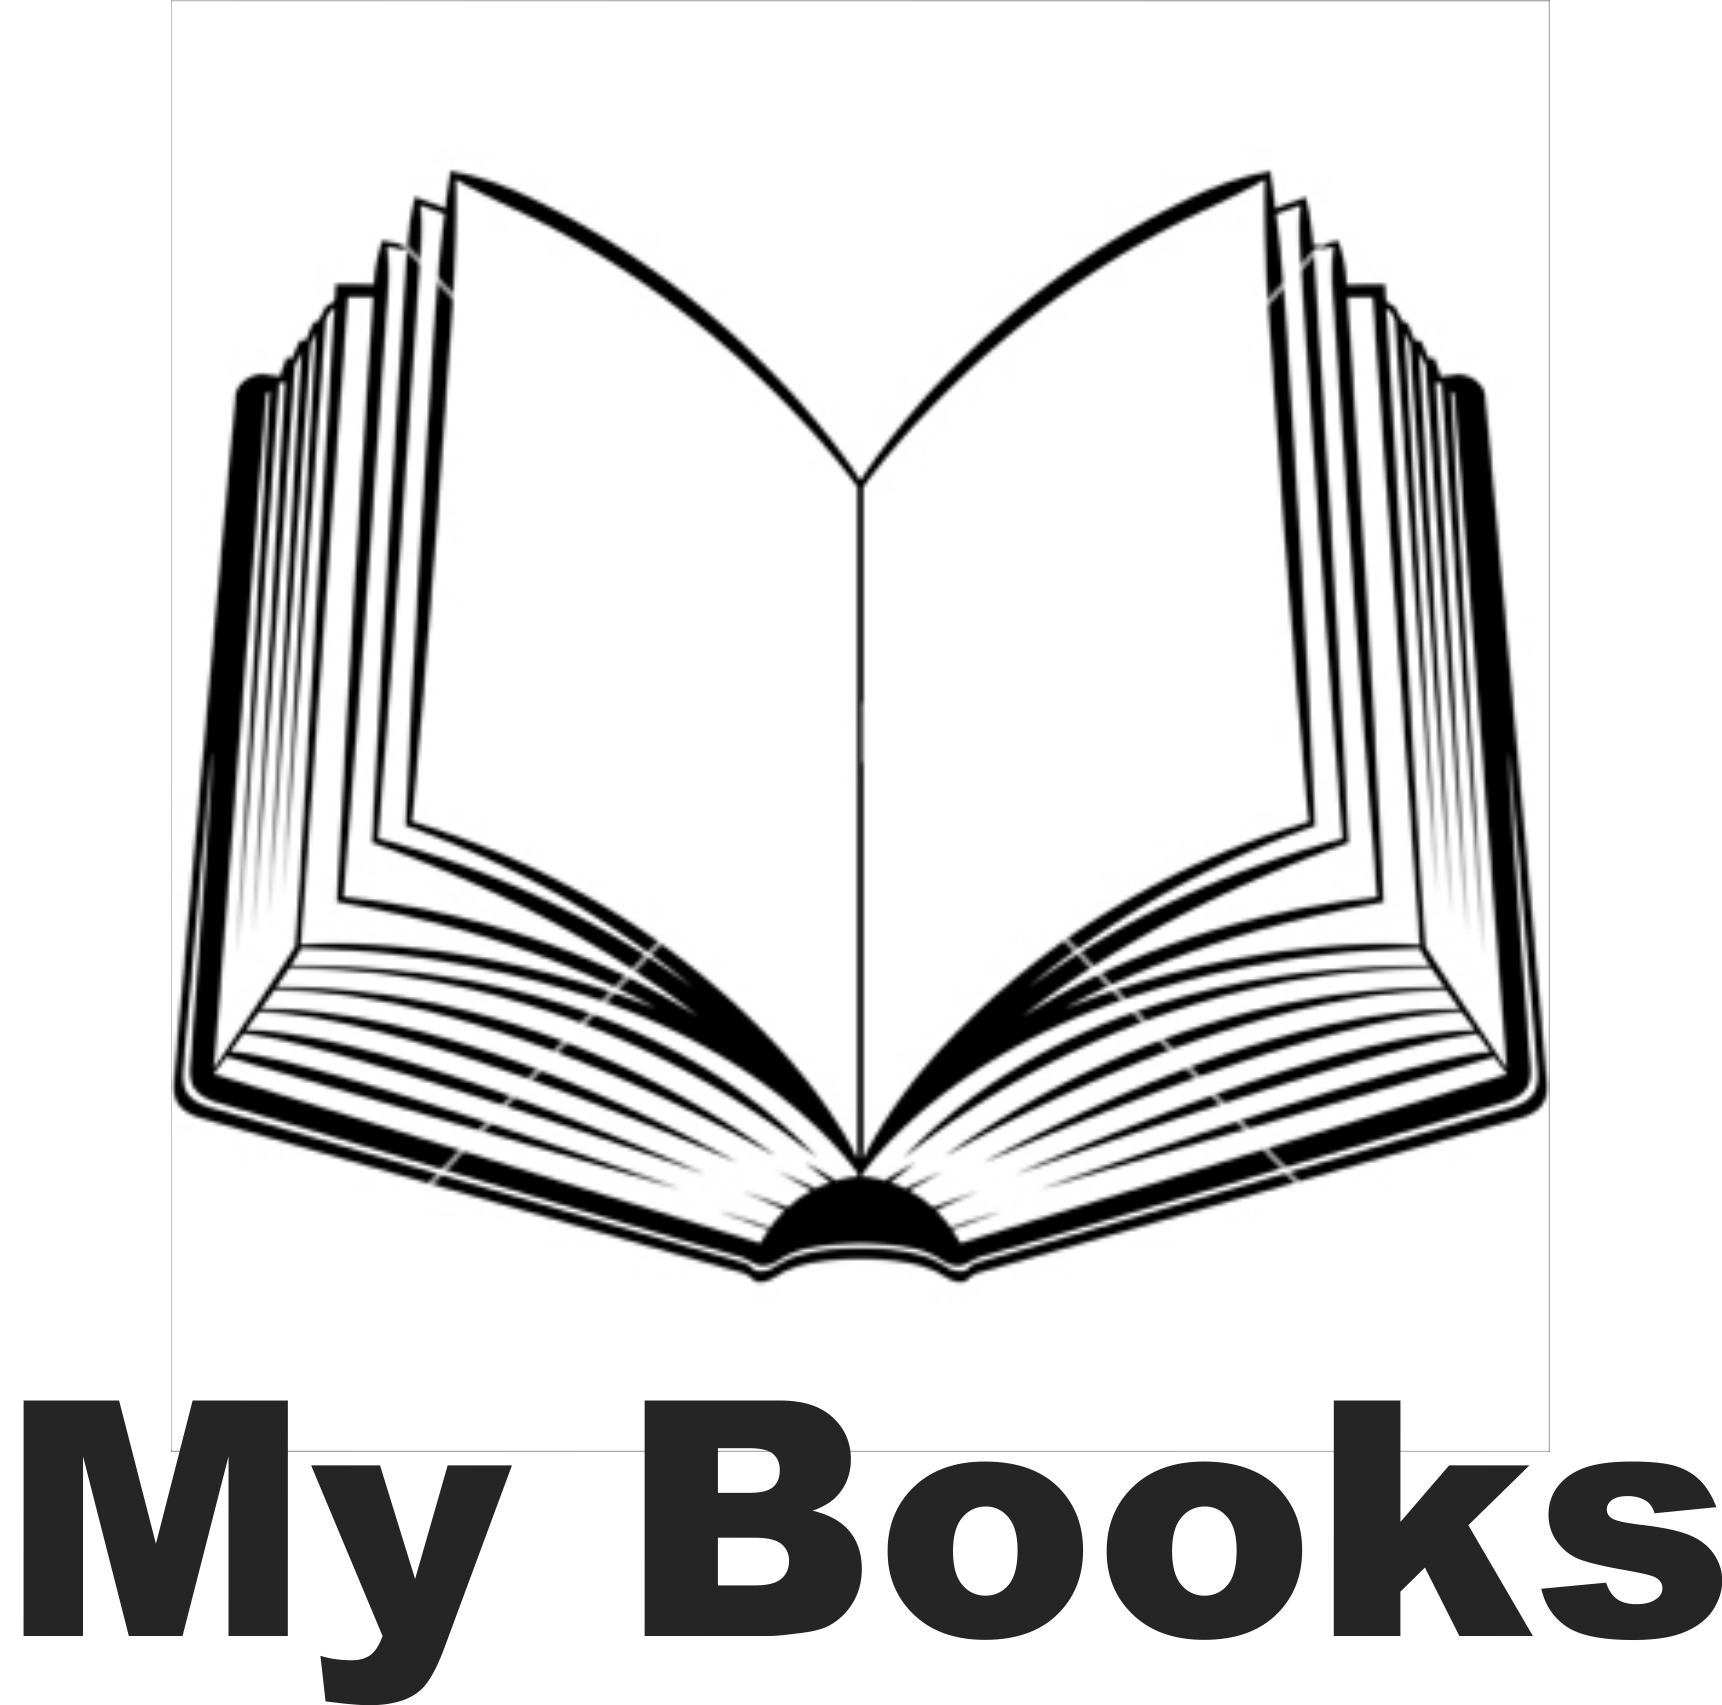 Find Books here